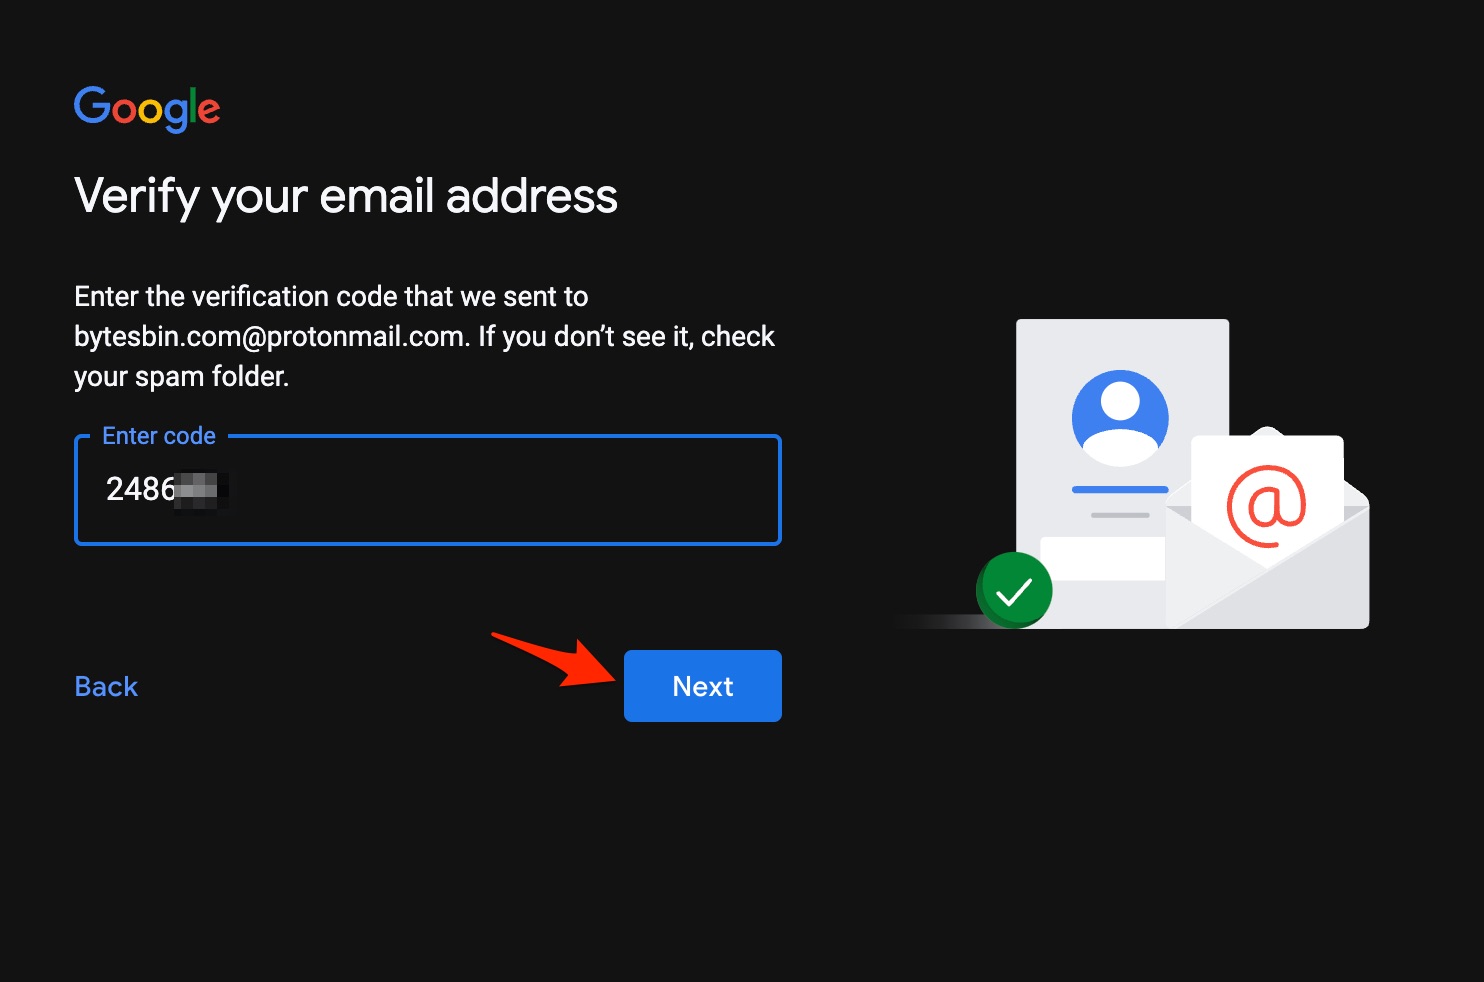 Verify Email Address using Code